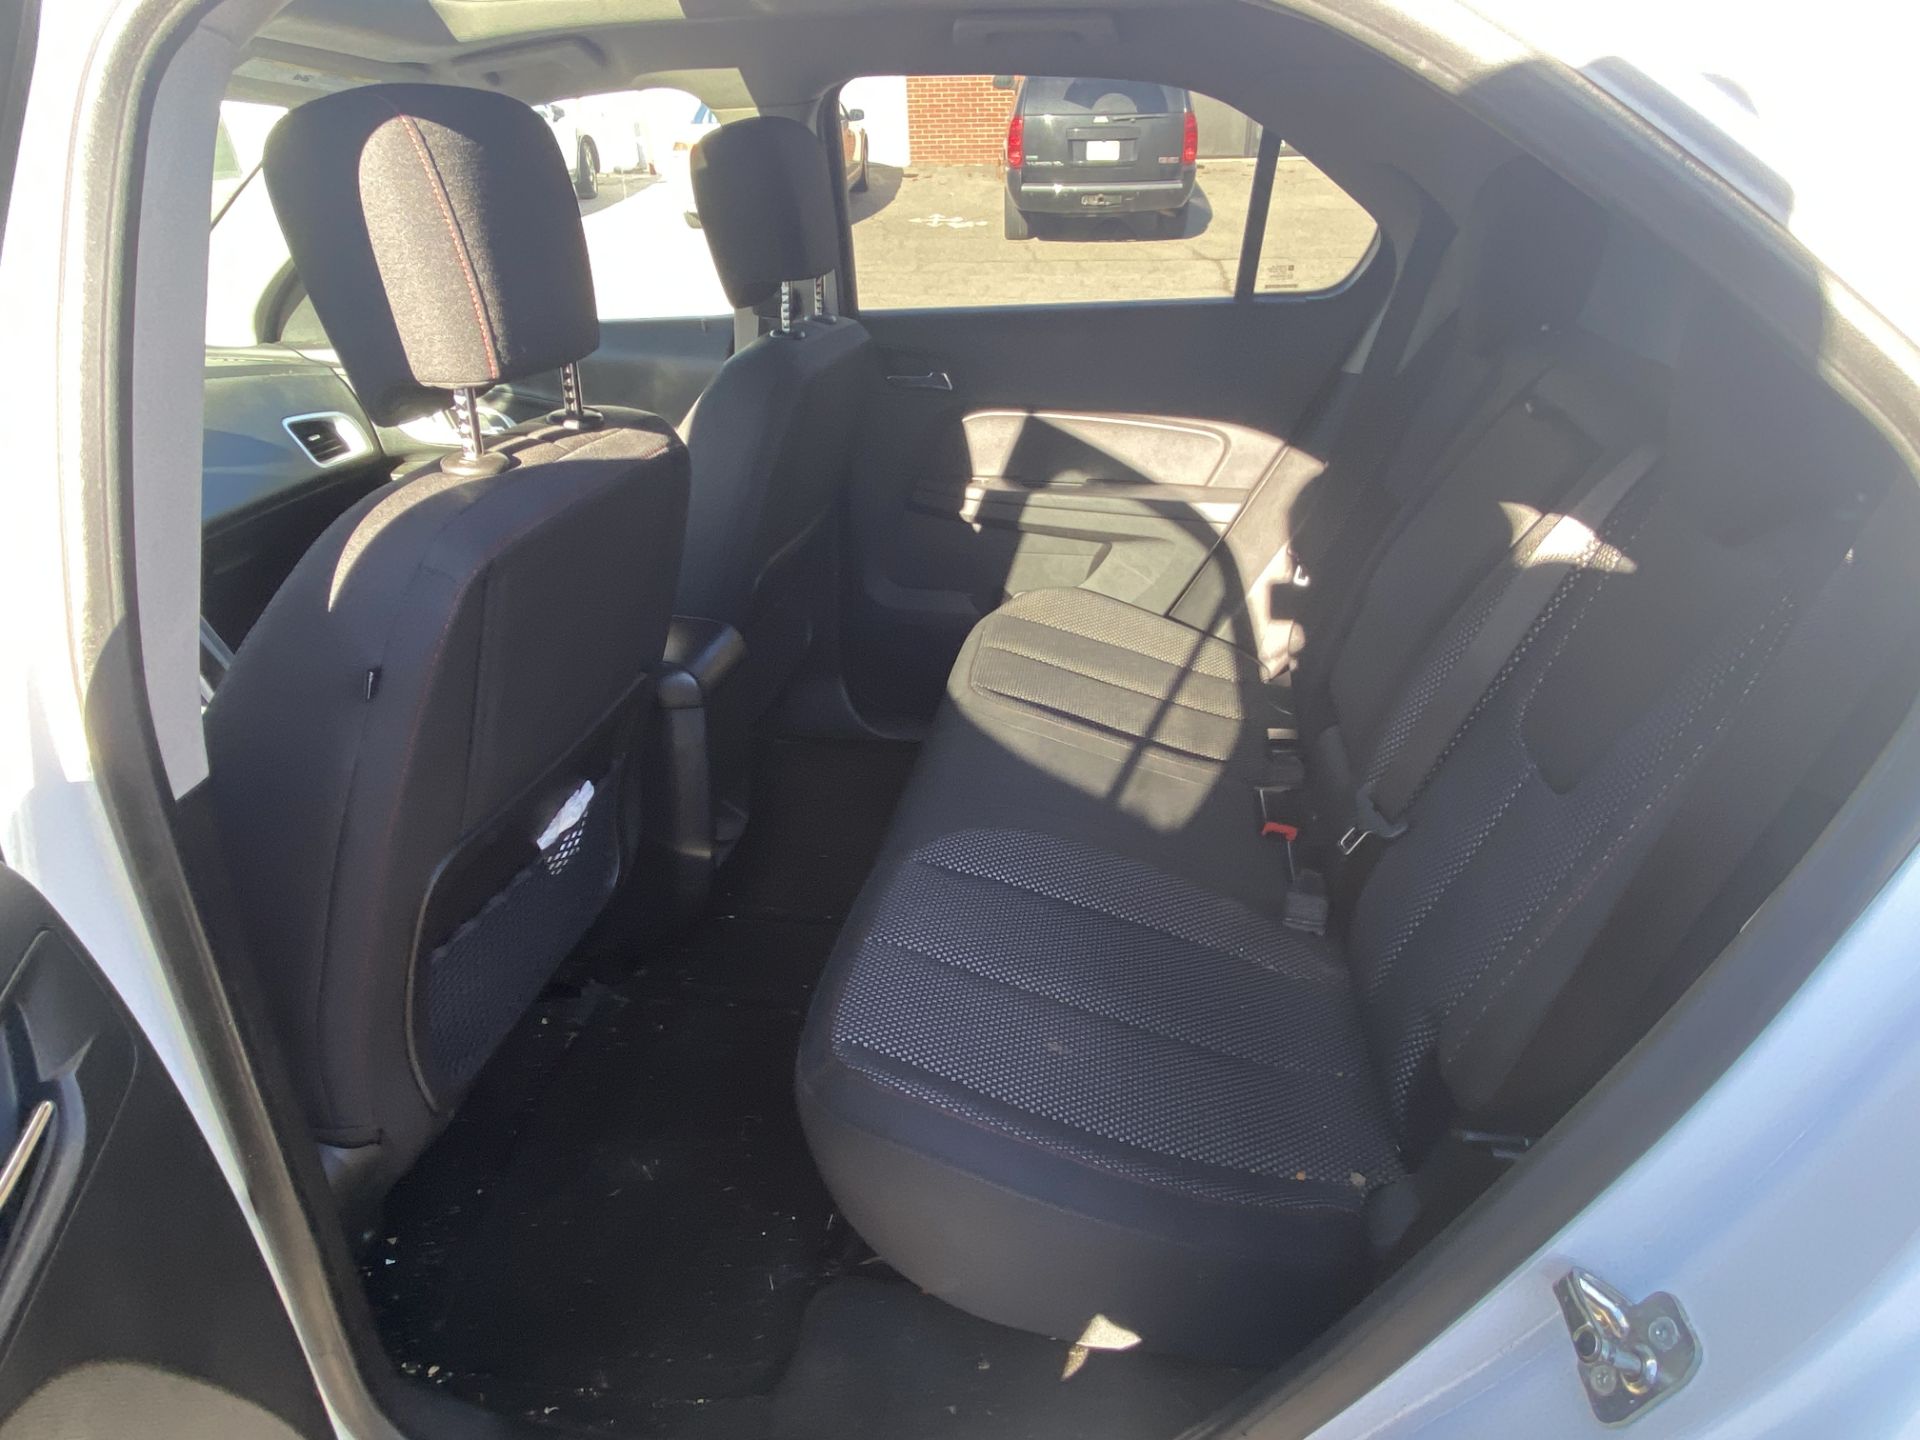 2013 Chevrolet Equinox LT AWD, 4 Cylinder 2.4L, Rear Backup Camera, Power Windows & Locks, Odom:148, - Image 15 of 16